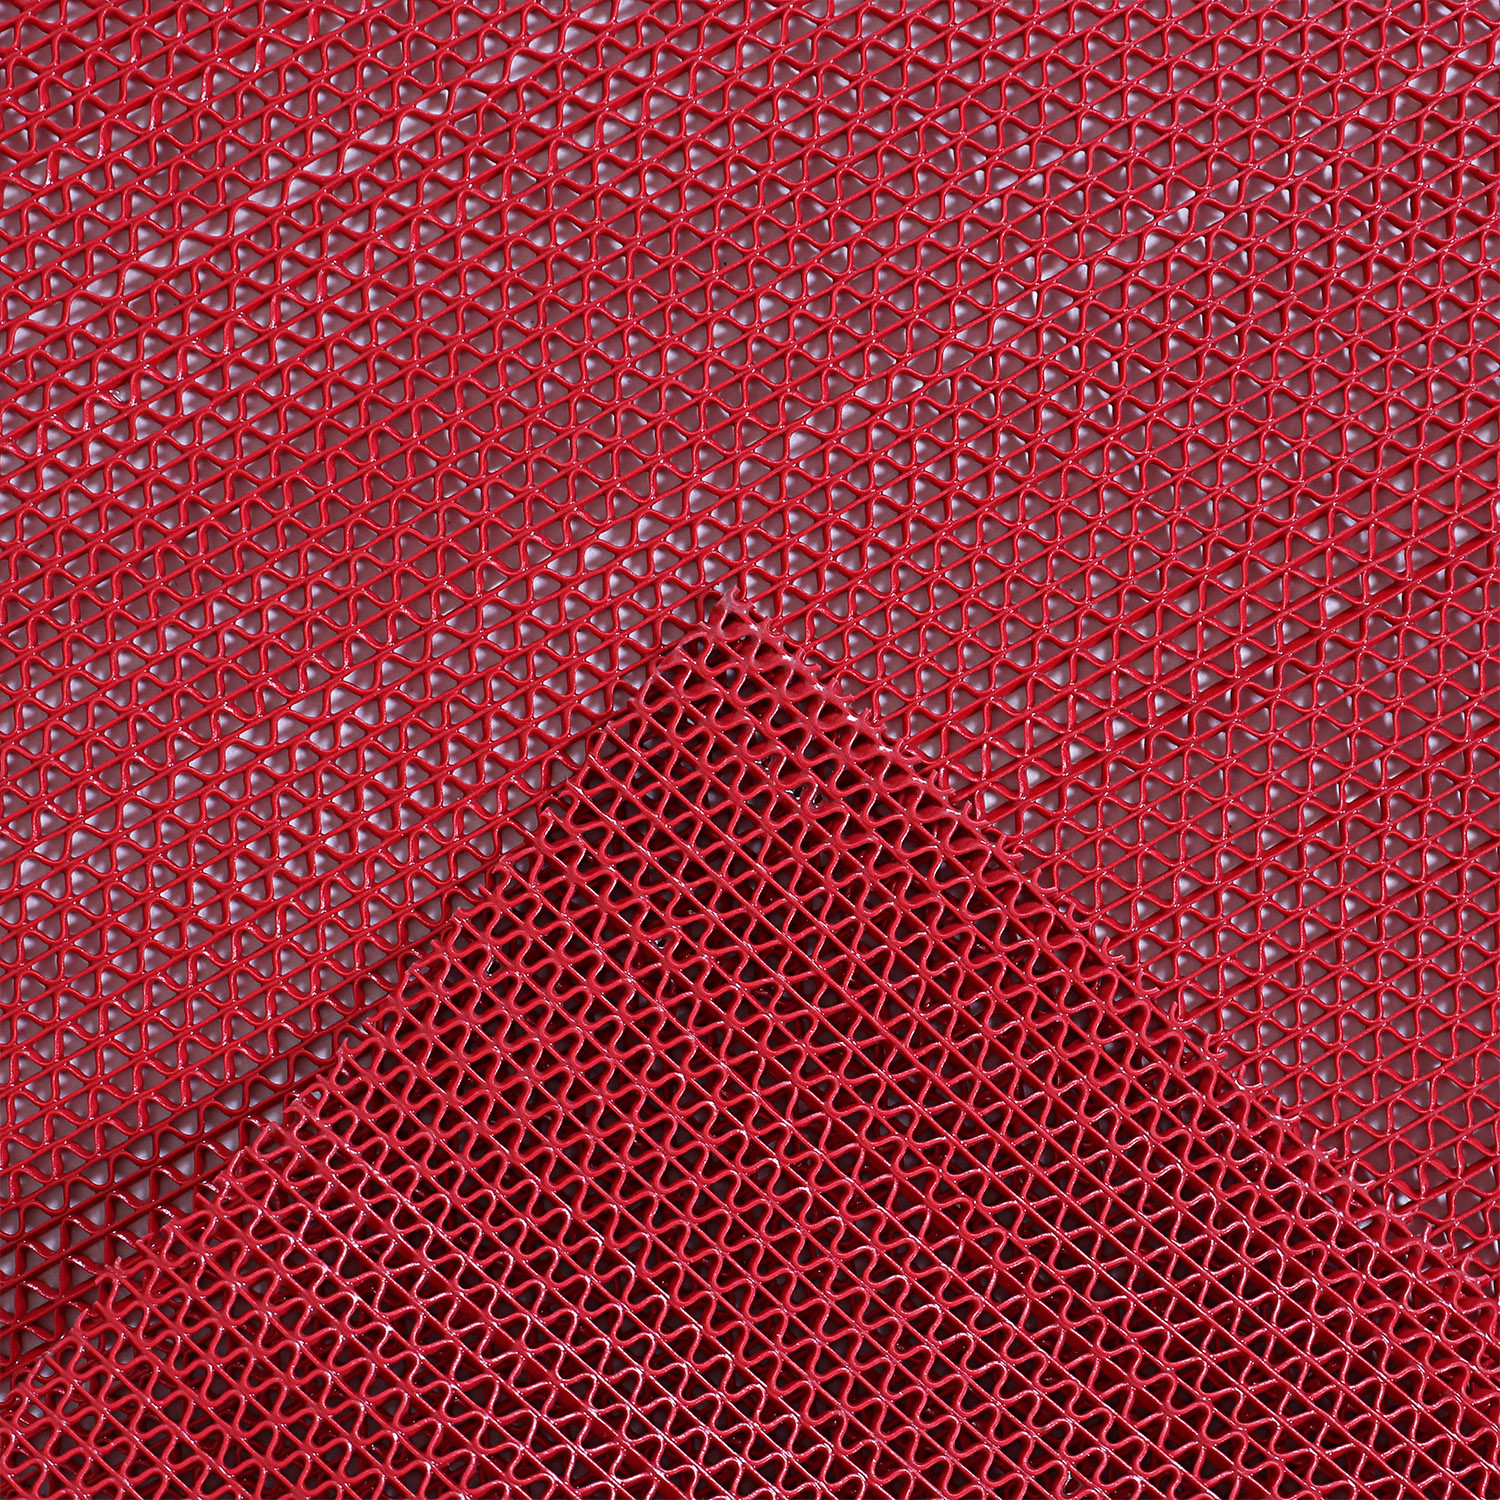 Kuber Industries Rubber Waterproof Anti-Skid Swimming Pool Mat|Shower Mat|Rainmat For Entrance Area,Bathroom,2 x 20 Feet (Red)